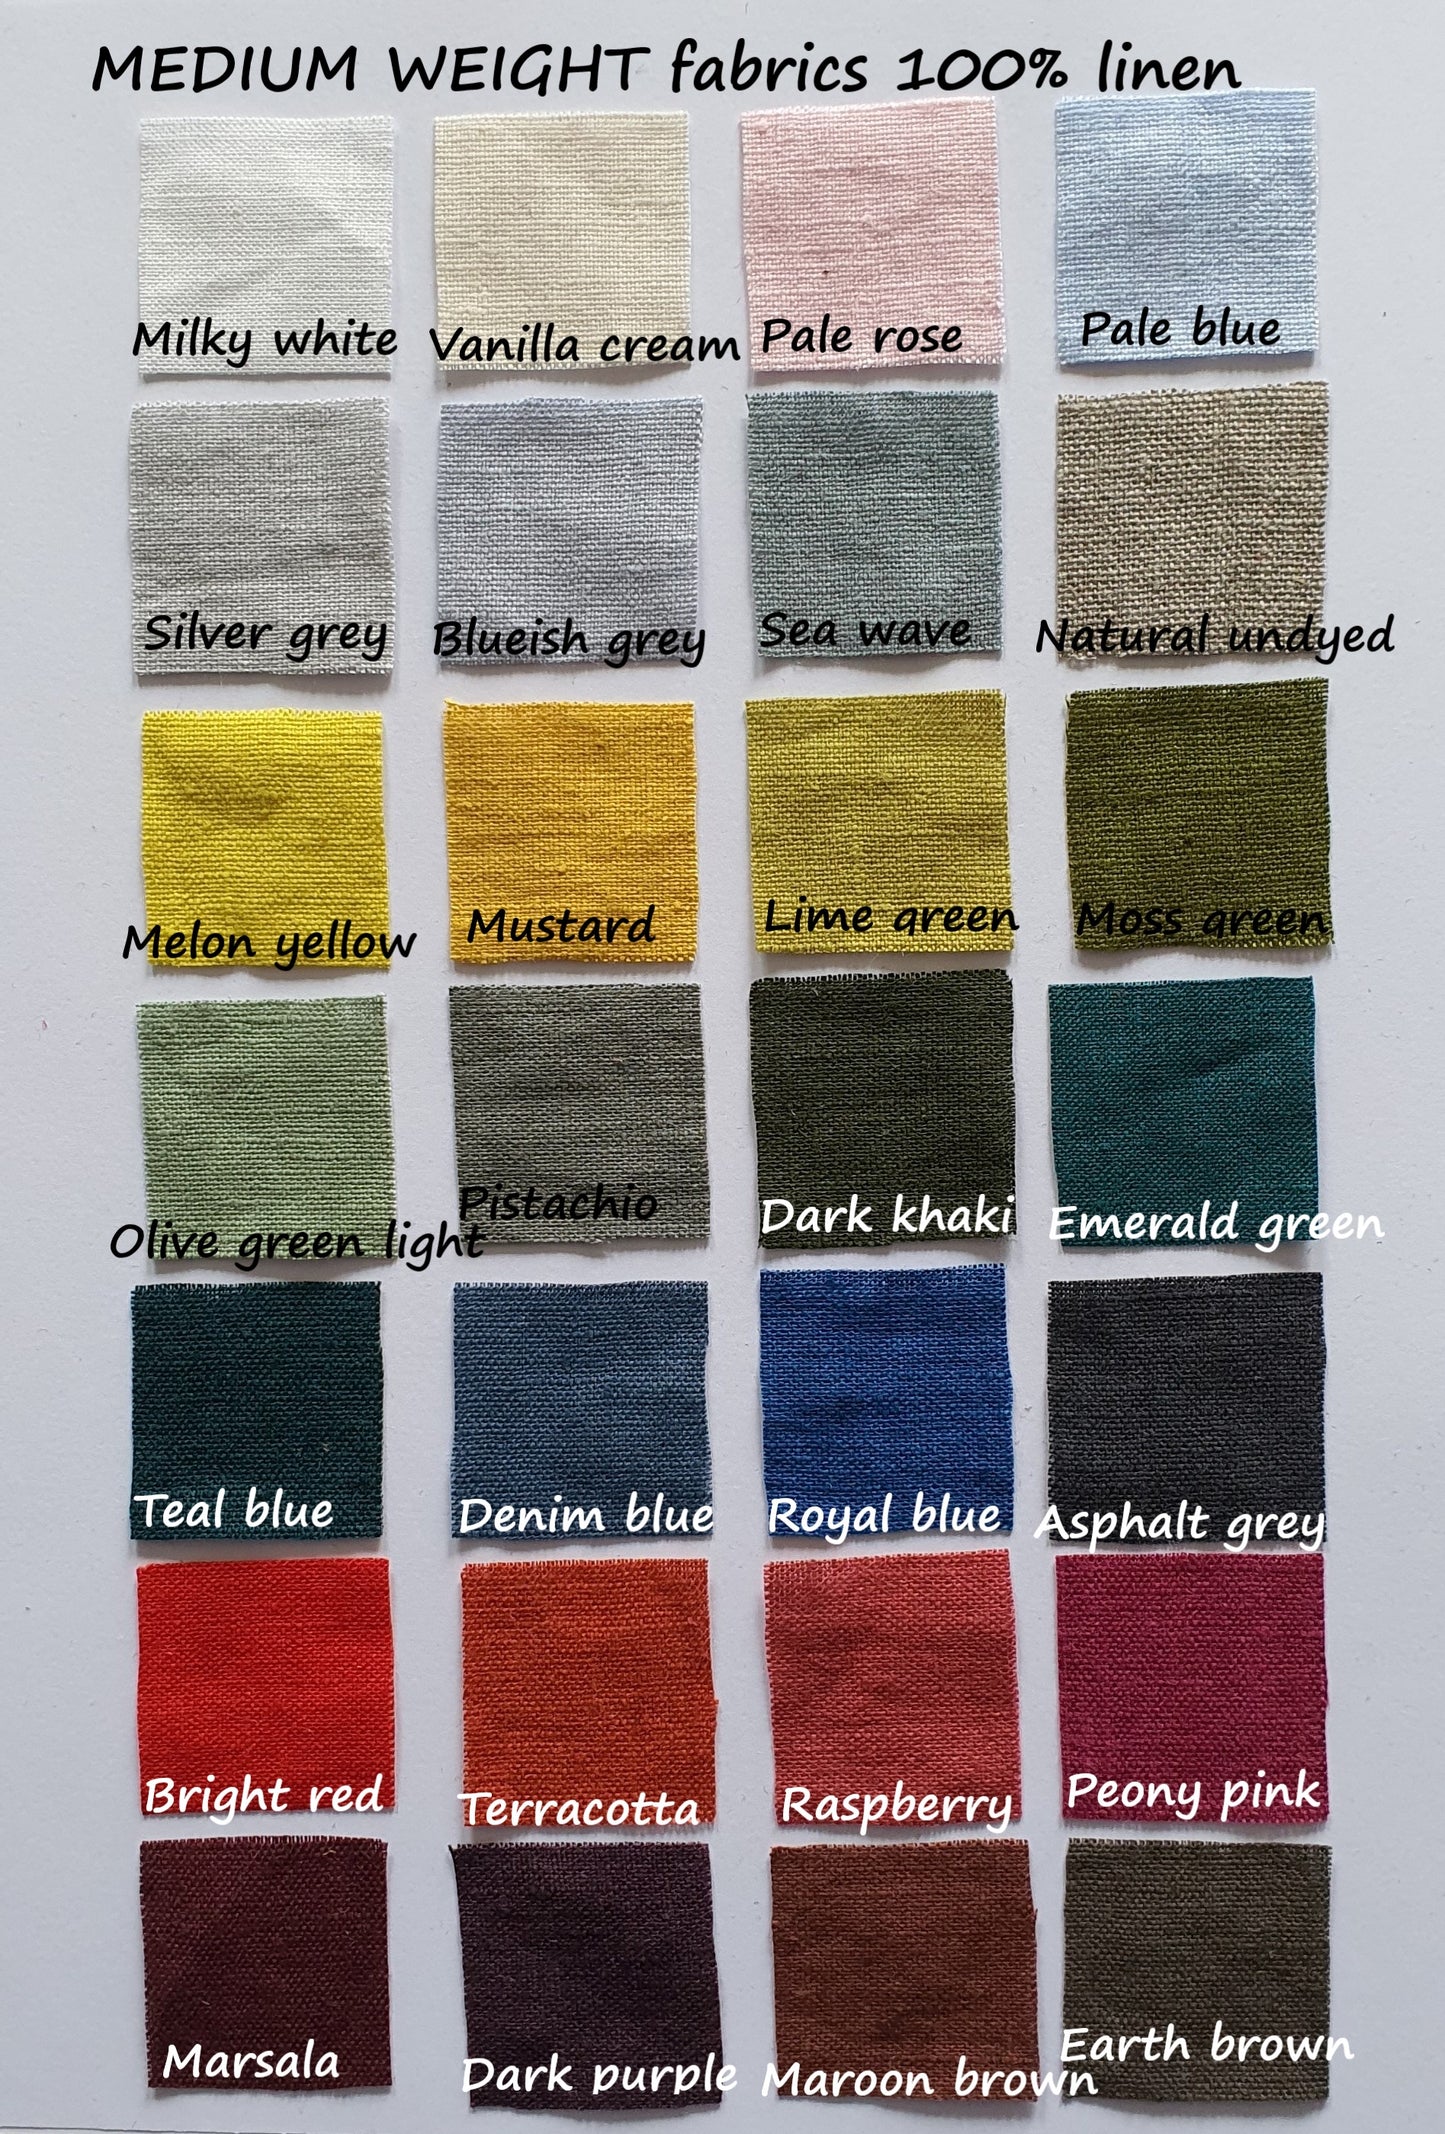 LGlinen linen fabric samples in various colors